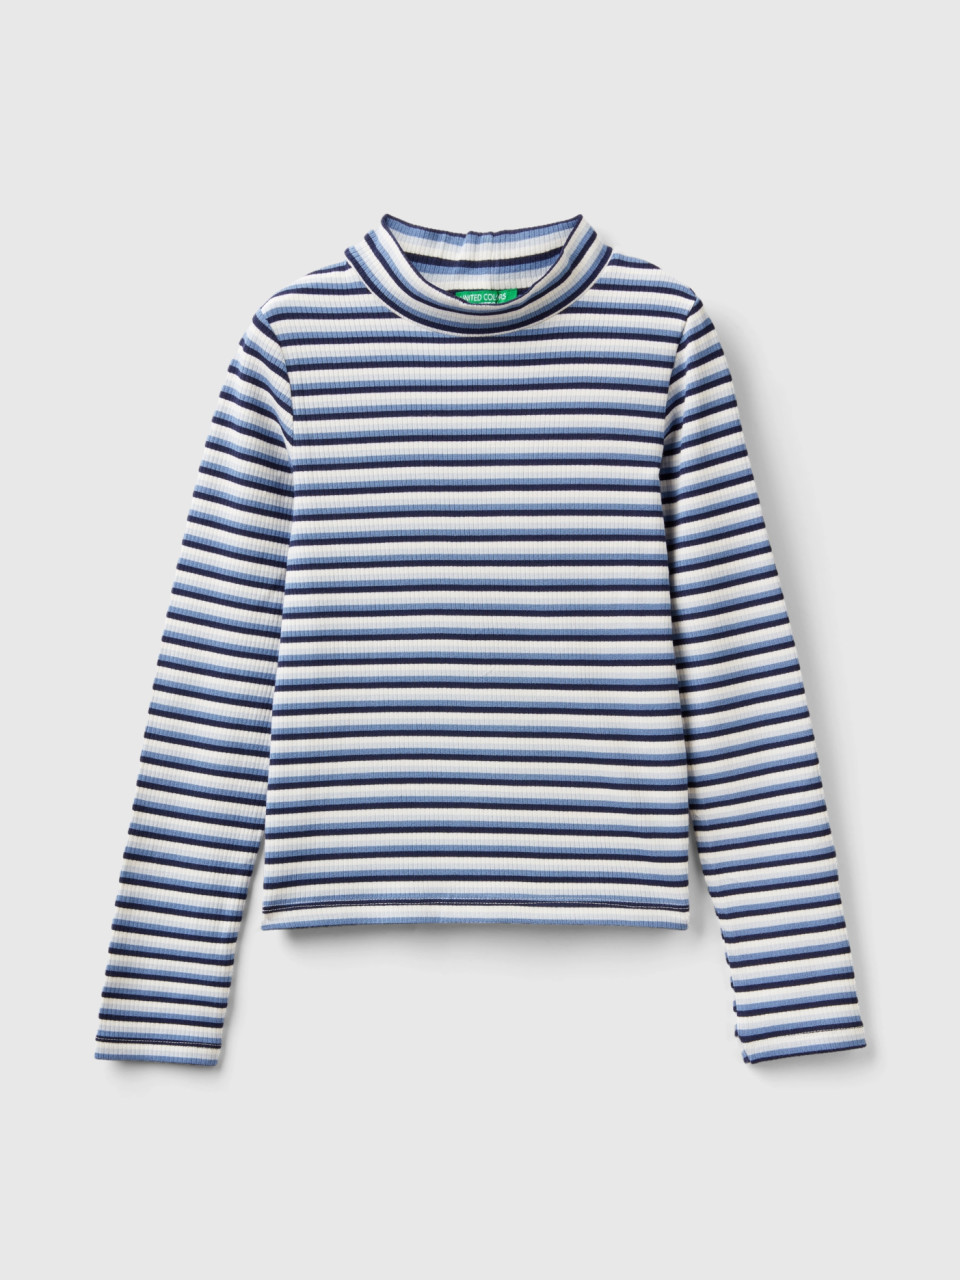 Benetton, Striped Turtleneck T-shirt, Multi-color, Kids